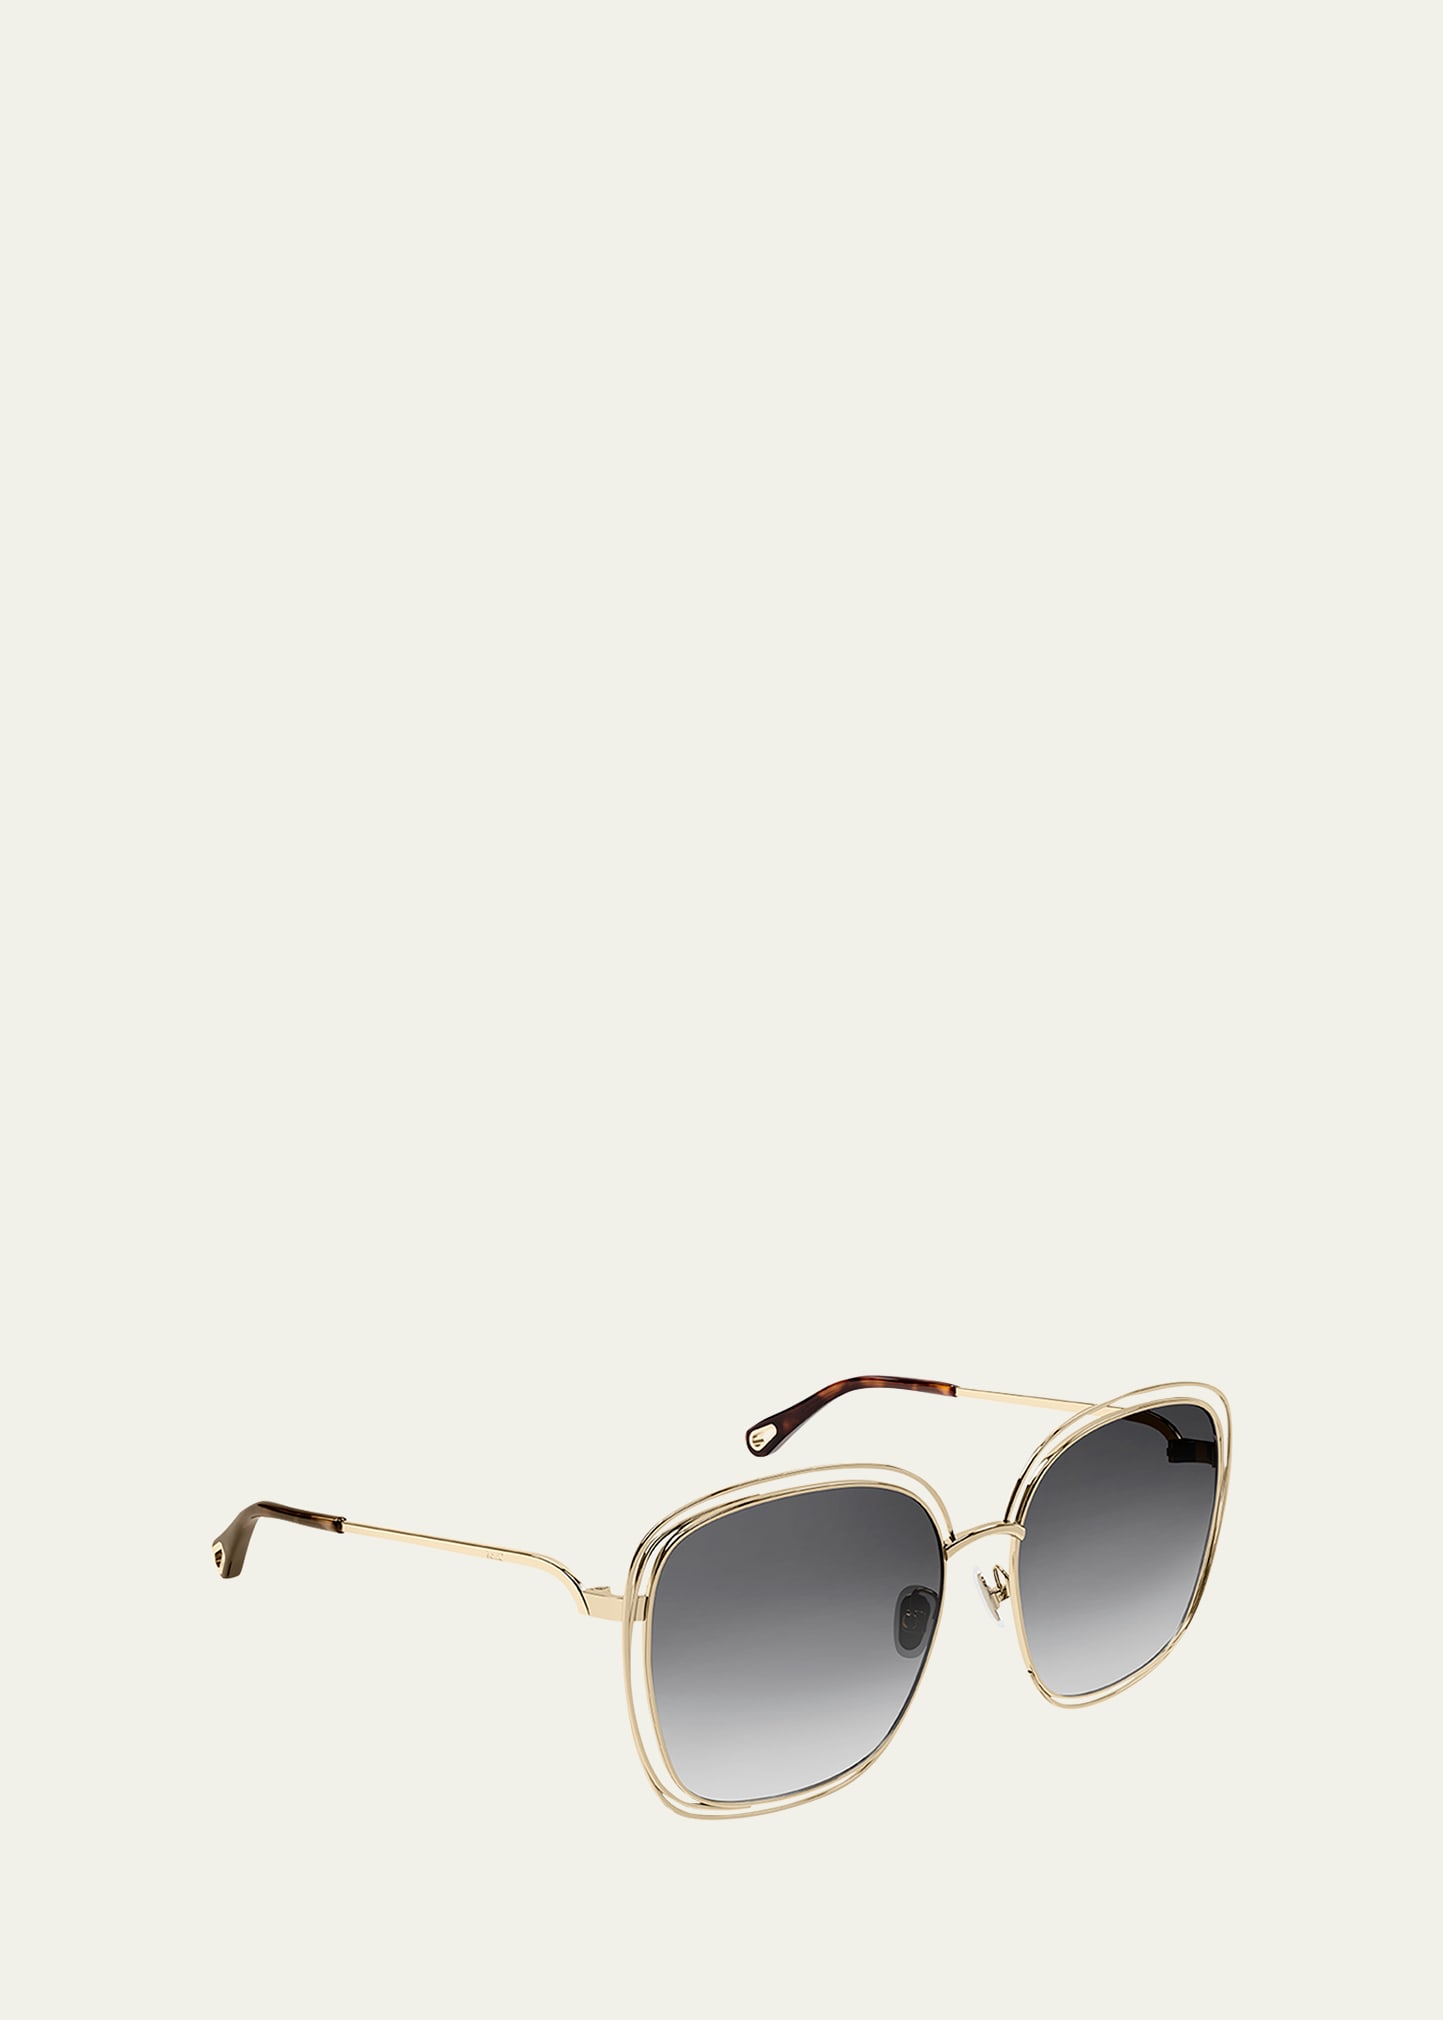 Chloé Cutout Square Metal Sunglasses In Shiny Light Gold